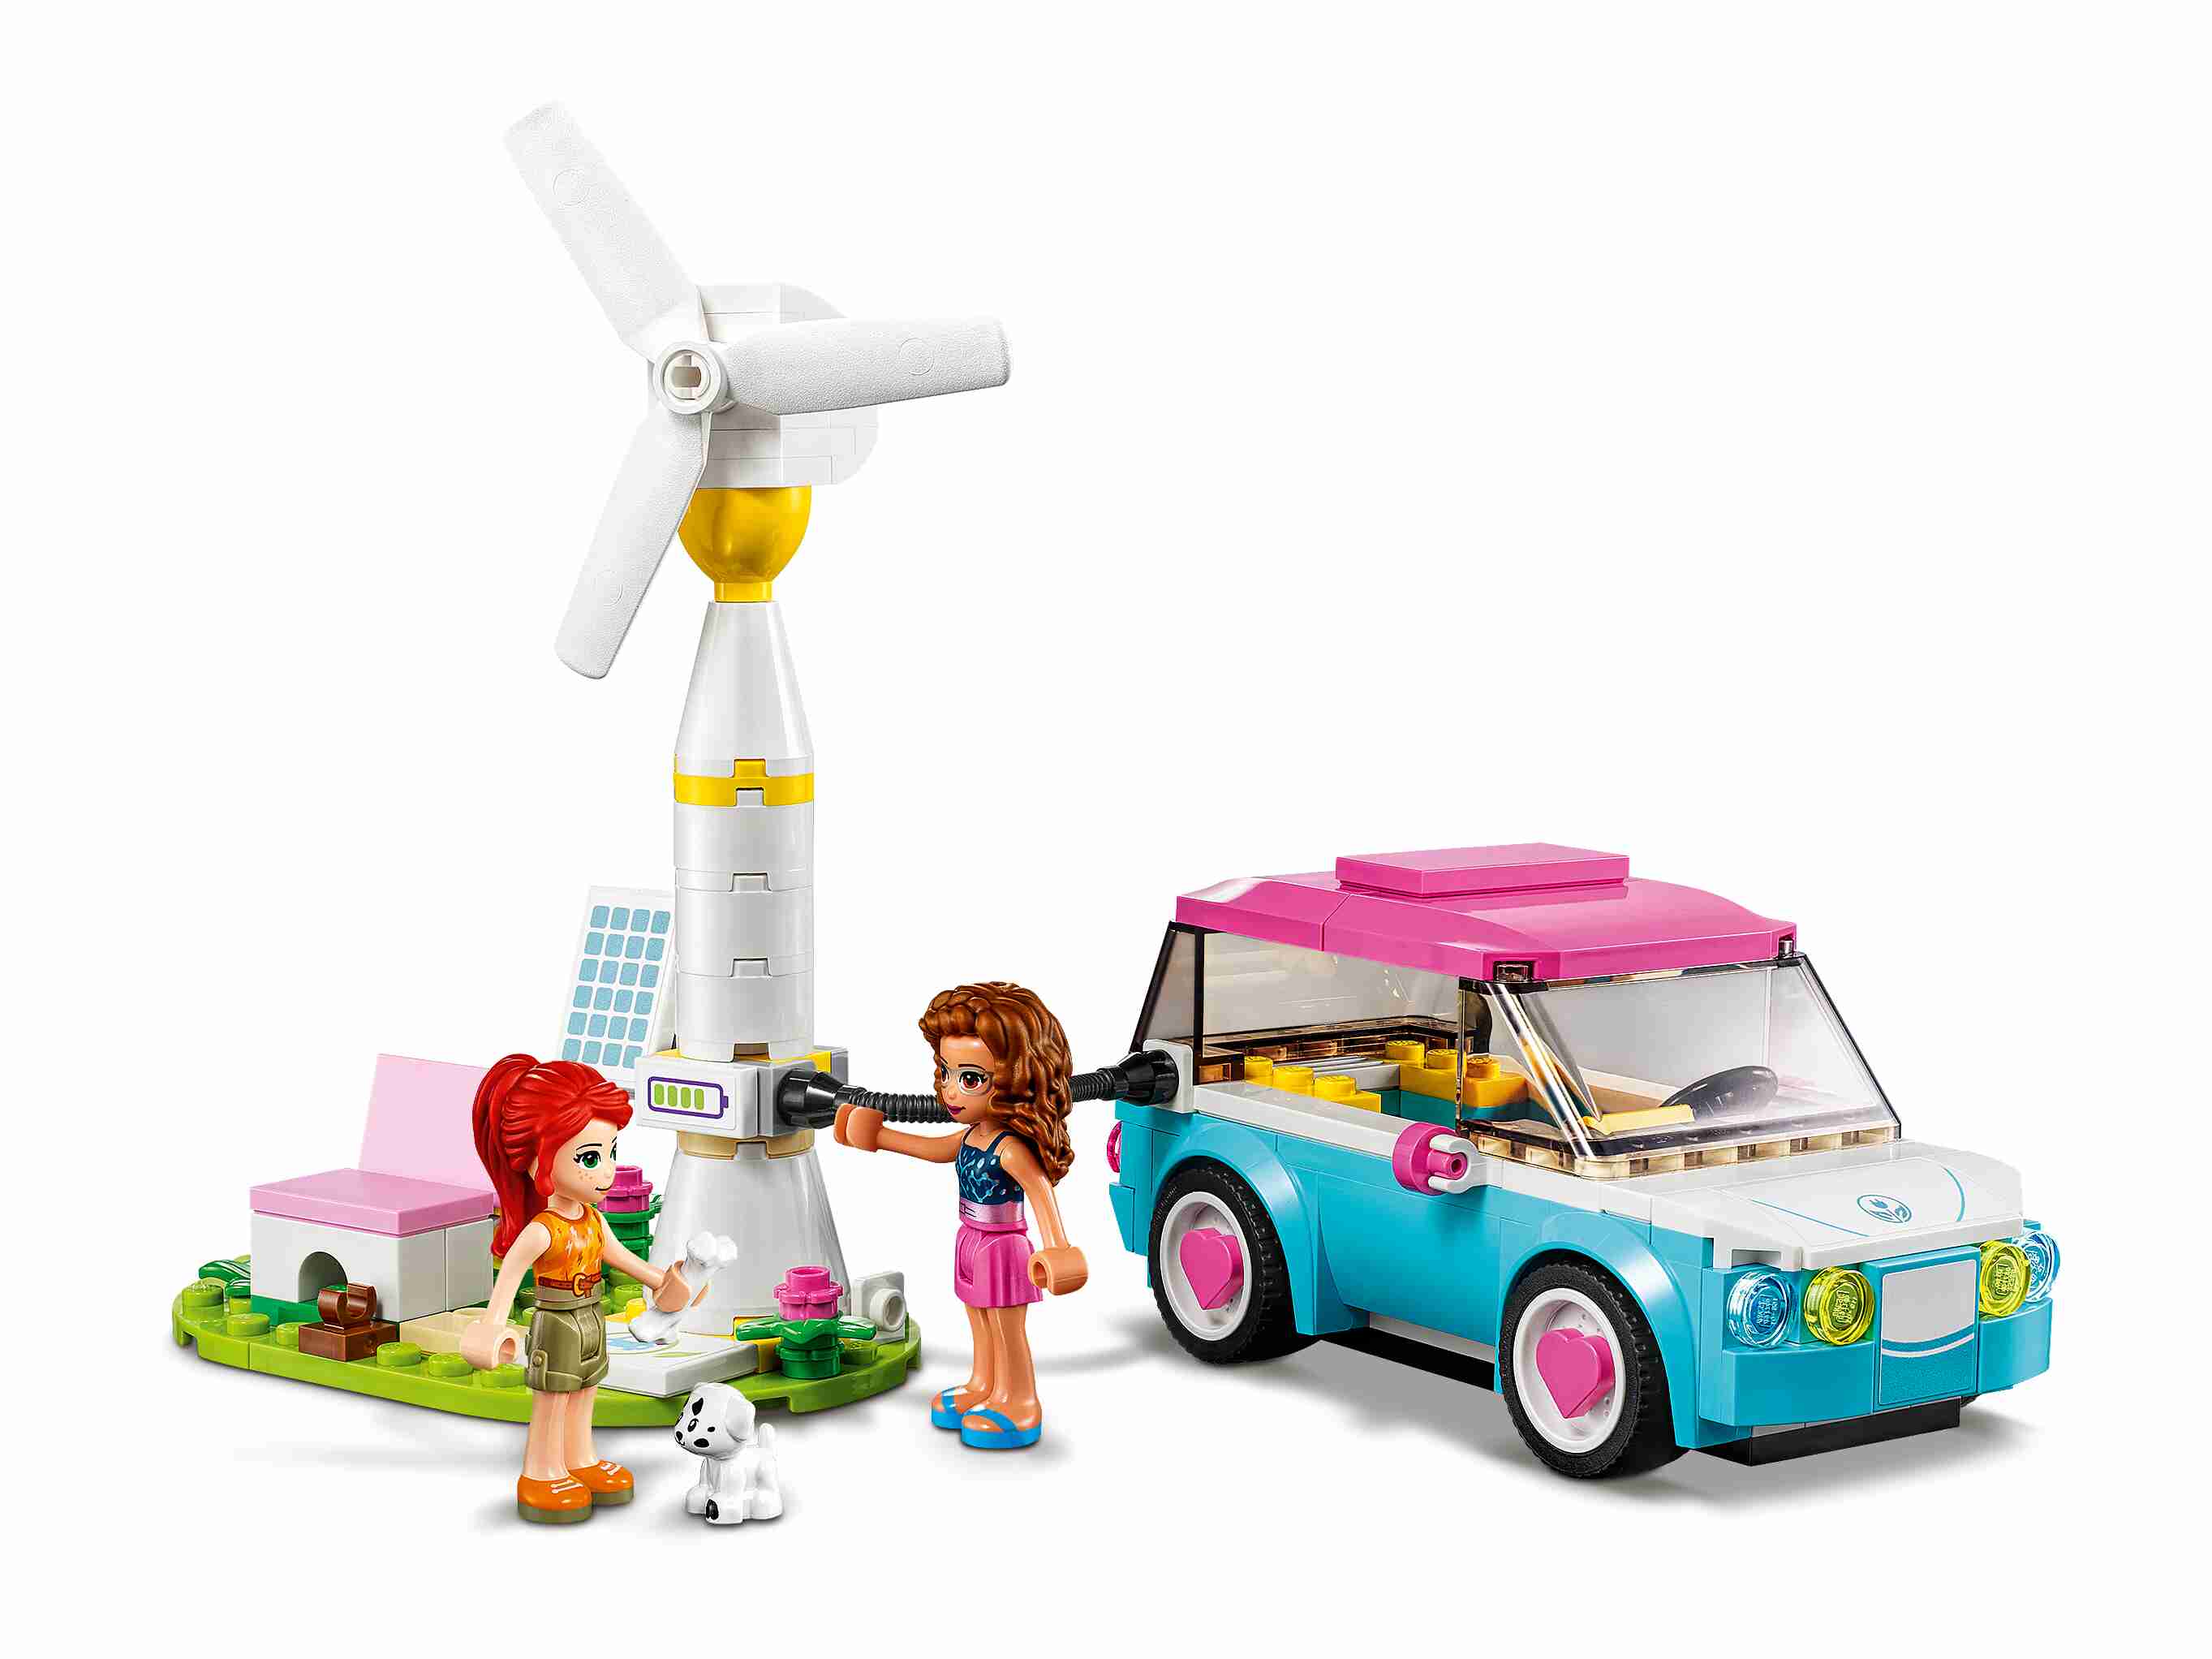 LEGO 41443 Friends Olivias Elektroauto Set mit Olivia & Mia und Spielzeugauto